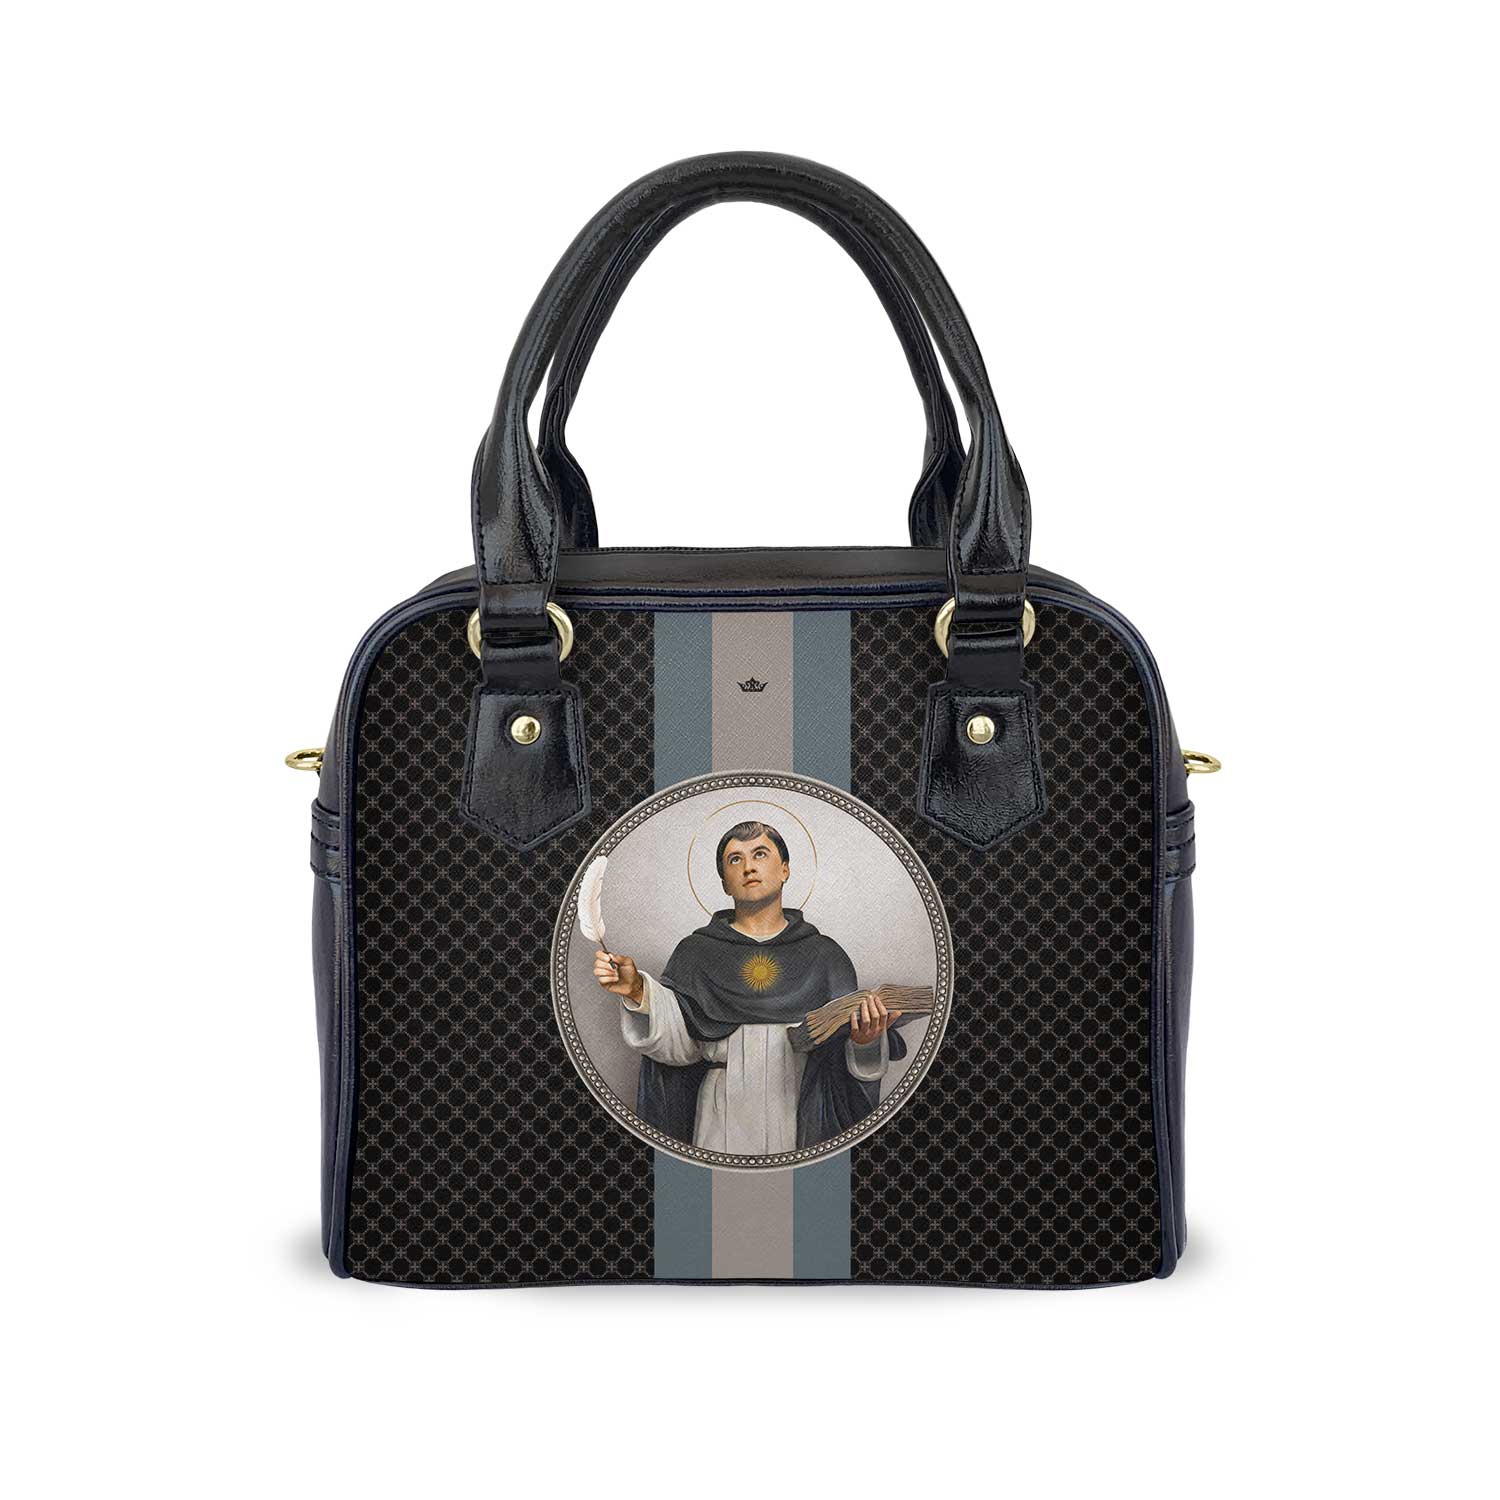 St. Thomas Aquinas Medallion Handbag